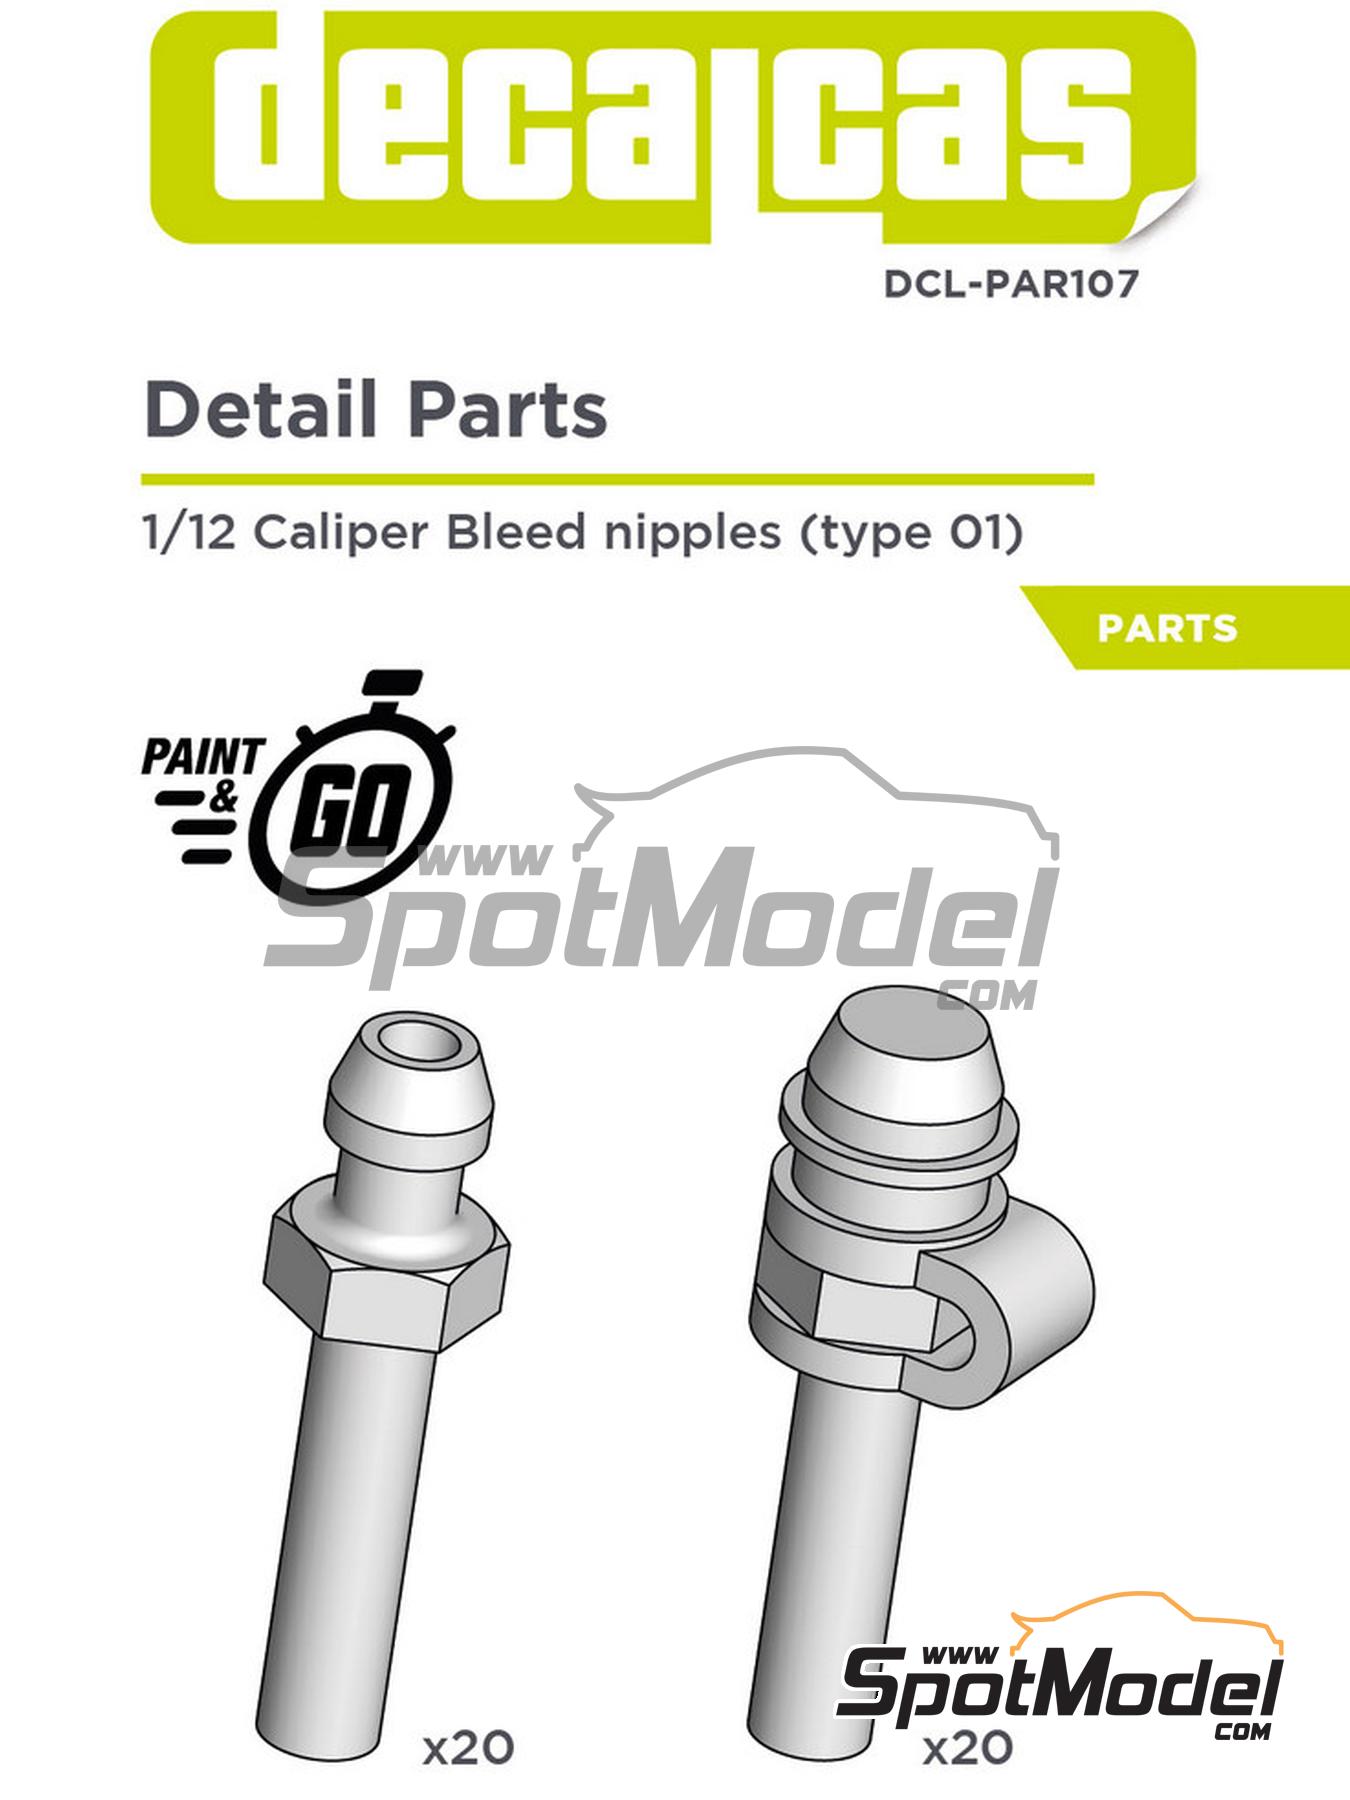 Decalcas DCL-PAR107: Detalle escala 1/12 - Purgador de frenos - Tipo 01 -  20 + 20 unidades (ref. DCL-PAR107)